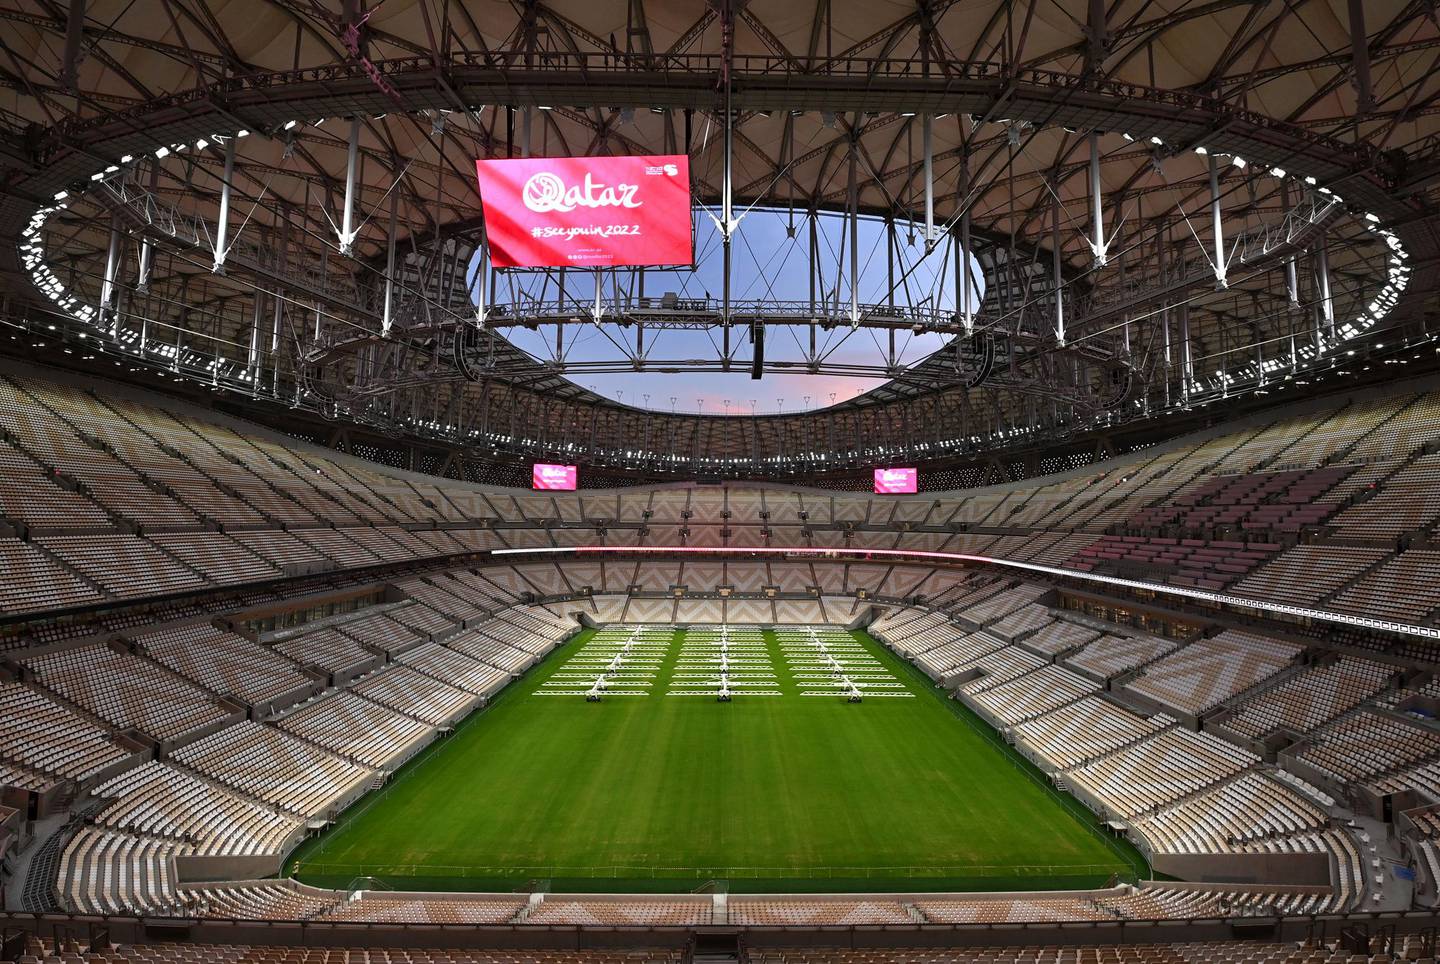 Vista general del estadio Lusail sede de la final de la Copa Mundial de la FIFA 2022, en Doha, Qatar. (Foto de Shaun Botterill/Getty Images) dfd